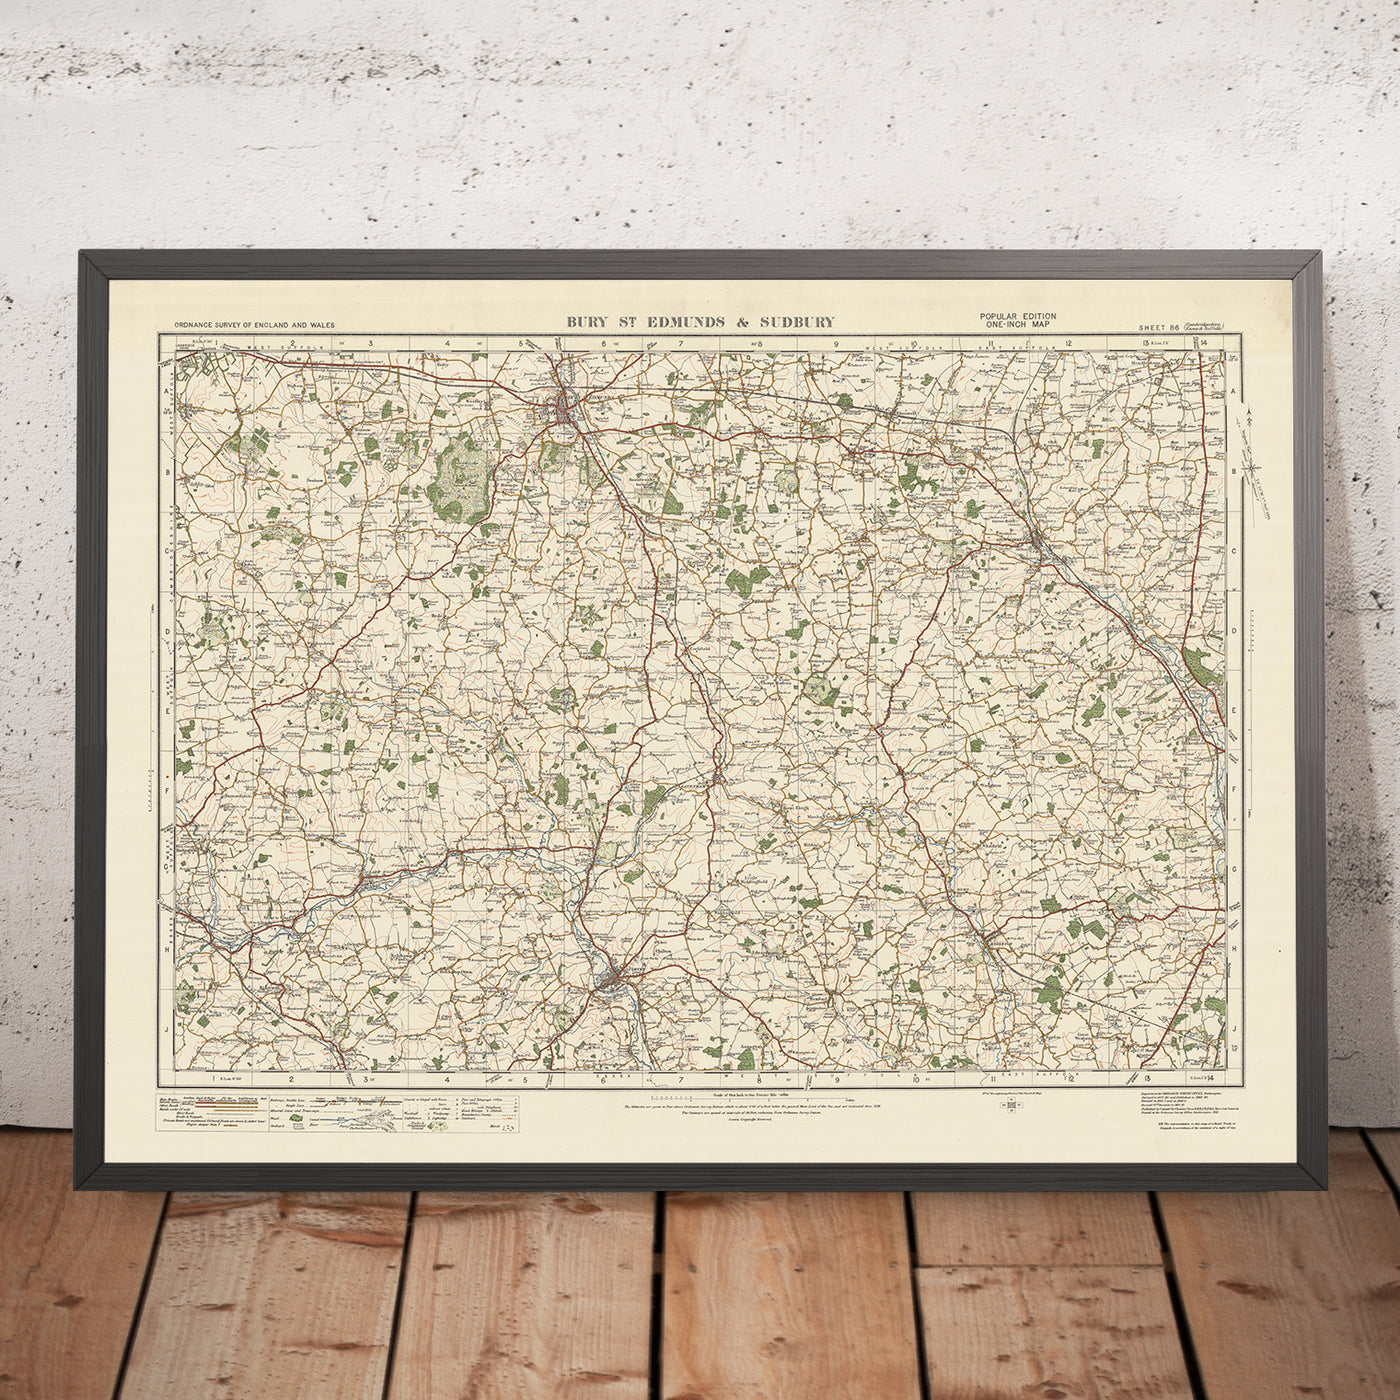 Old Ordnance Survey Map, Sheet 86 - Bury St. Edmunds & Sudbury, 1925: Haverhill, Stowmarket, Hadleigh, Needham Market, Glemsford